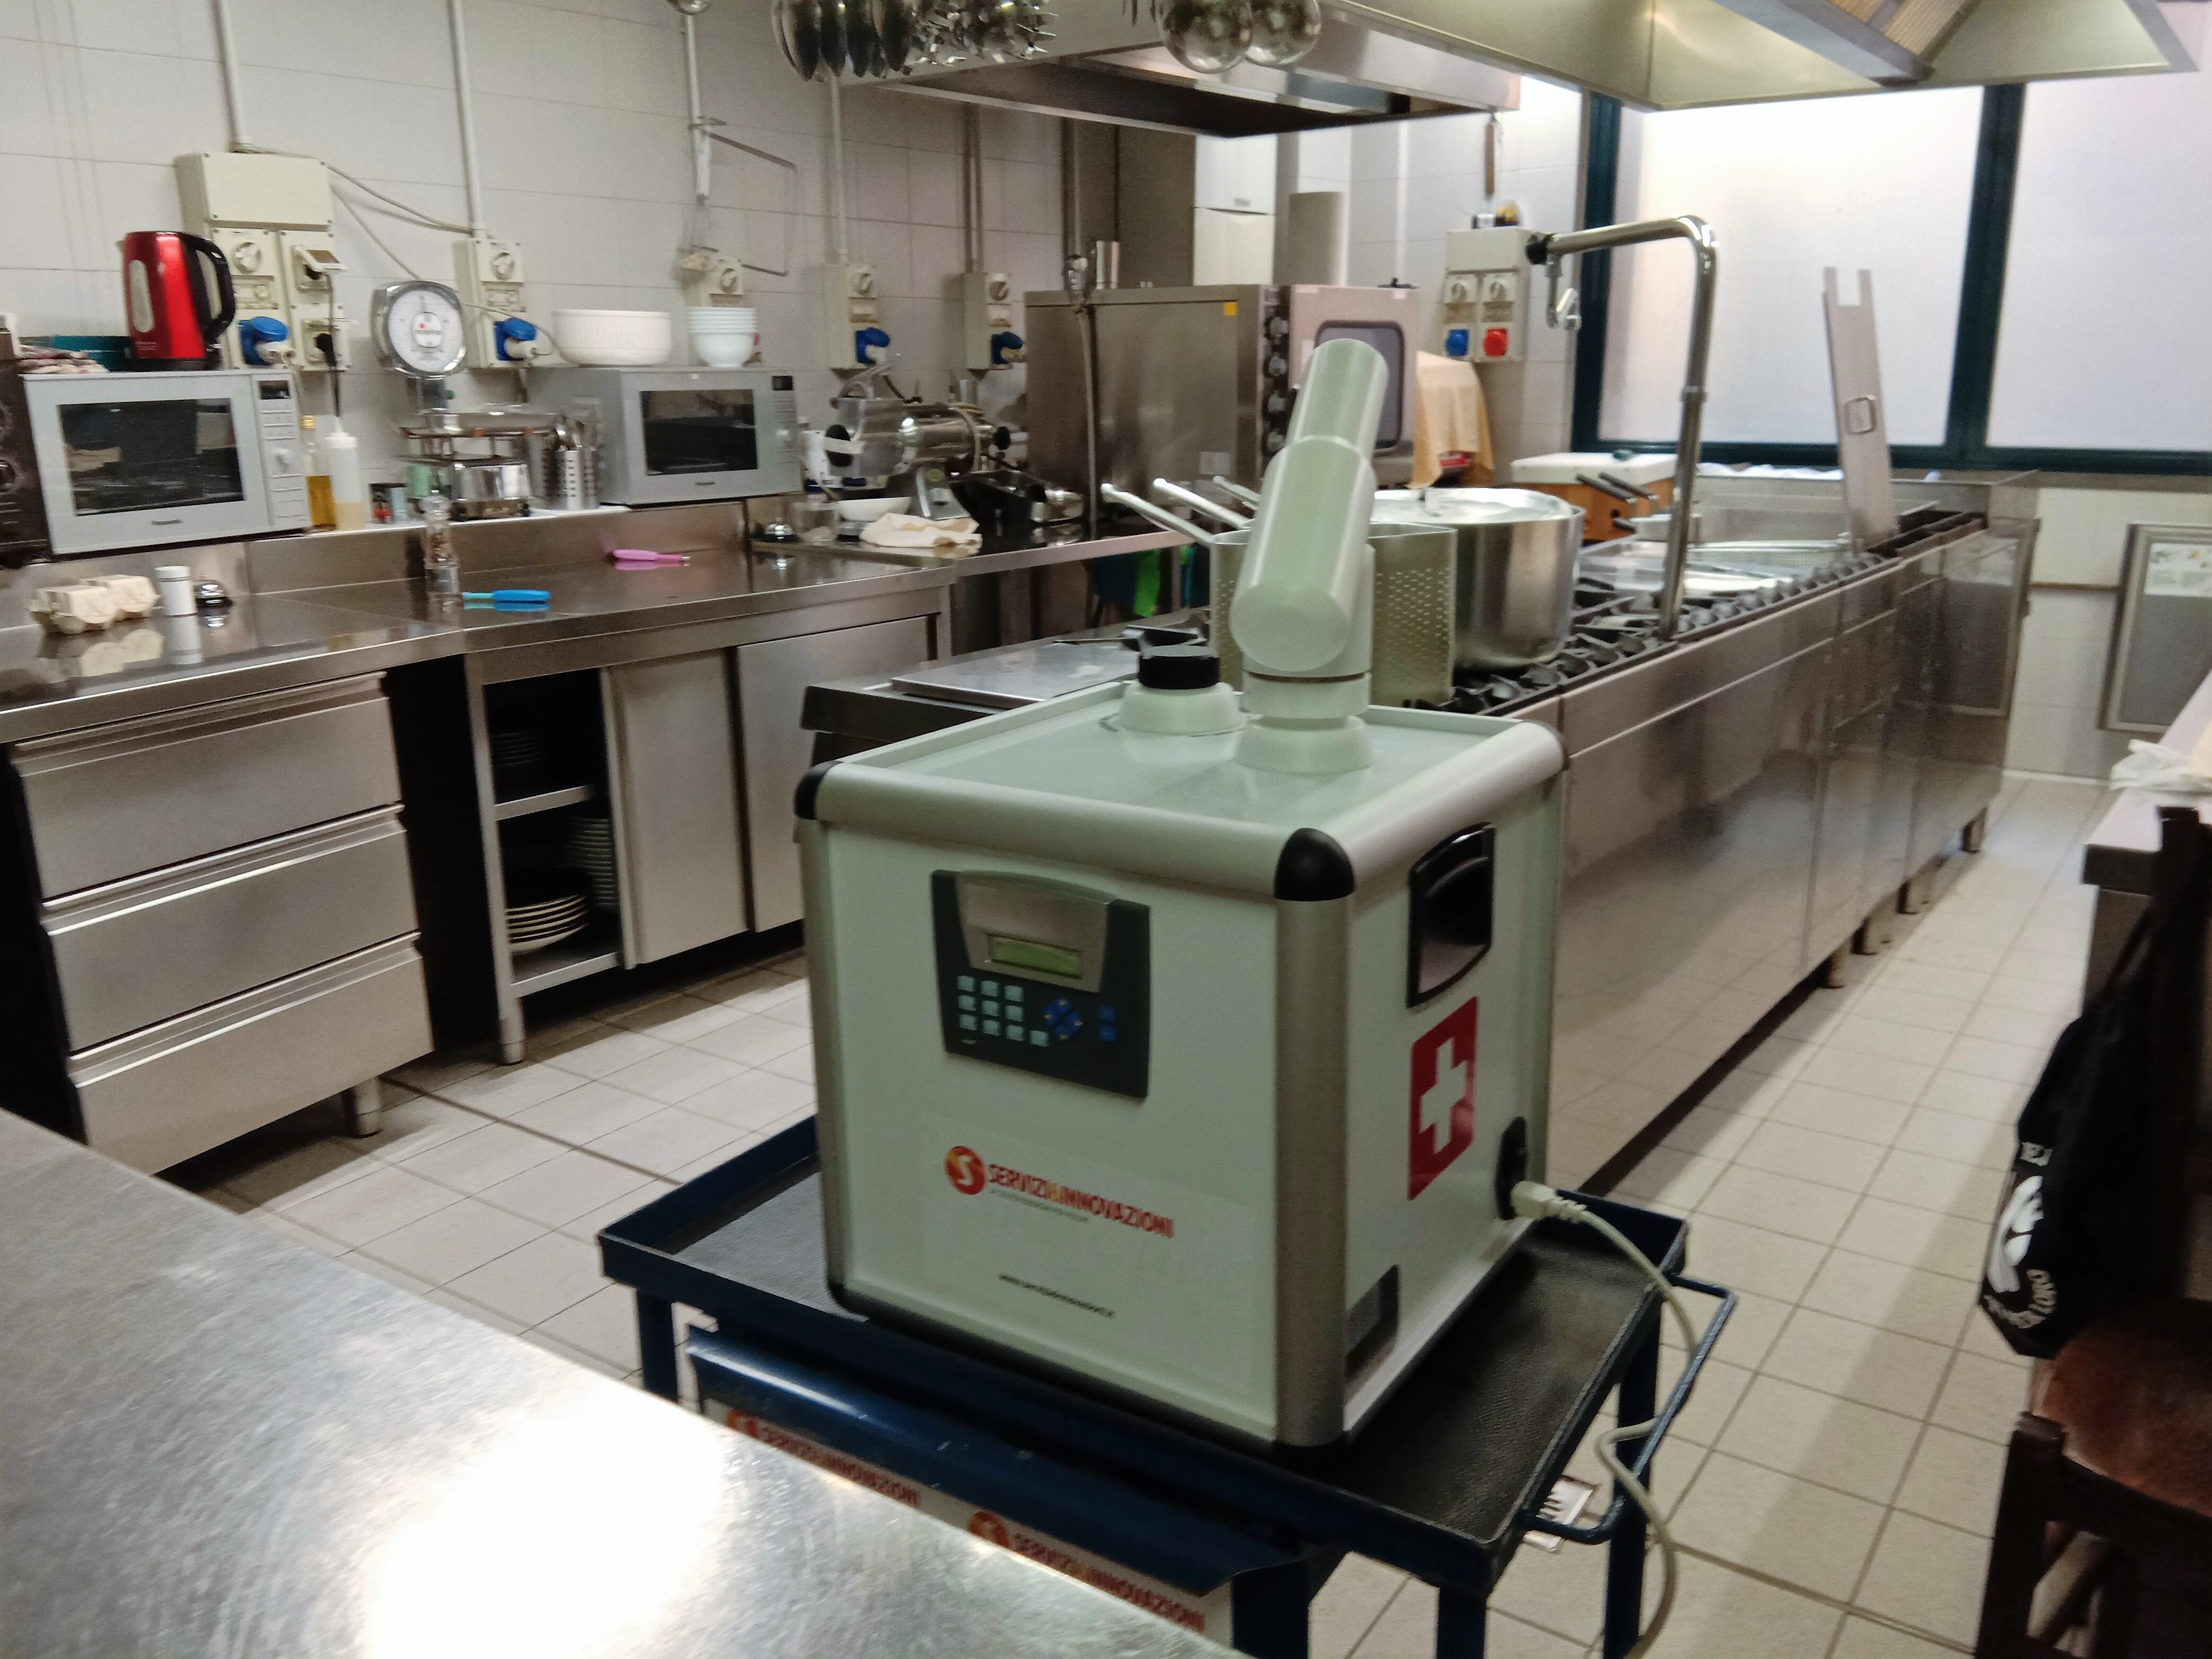 disinfezione cucine ristoranti emilia romagna